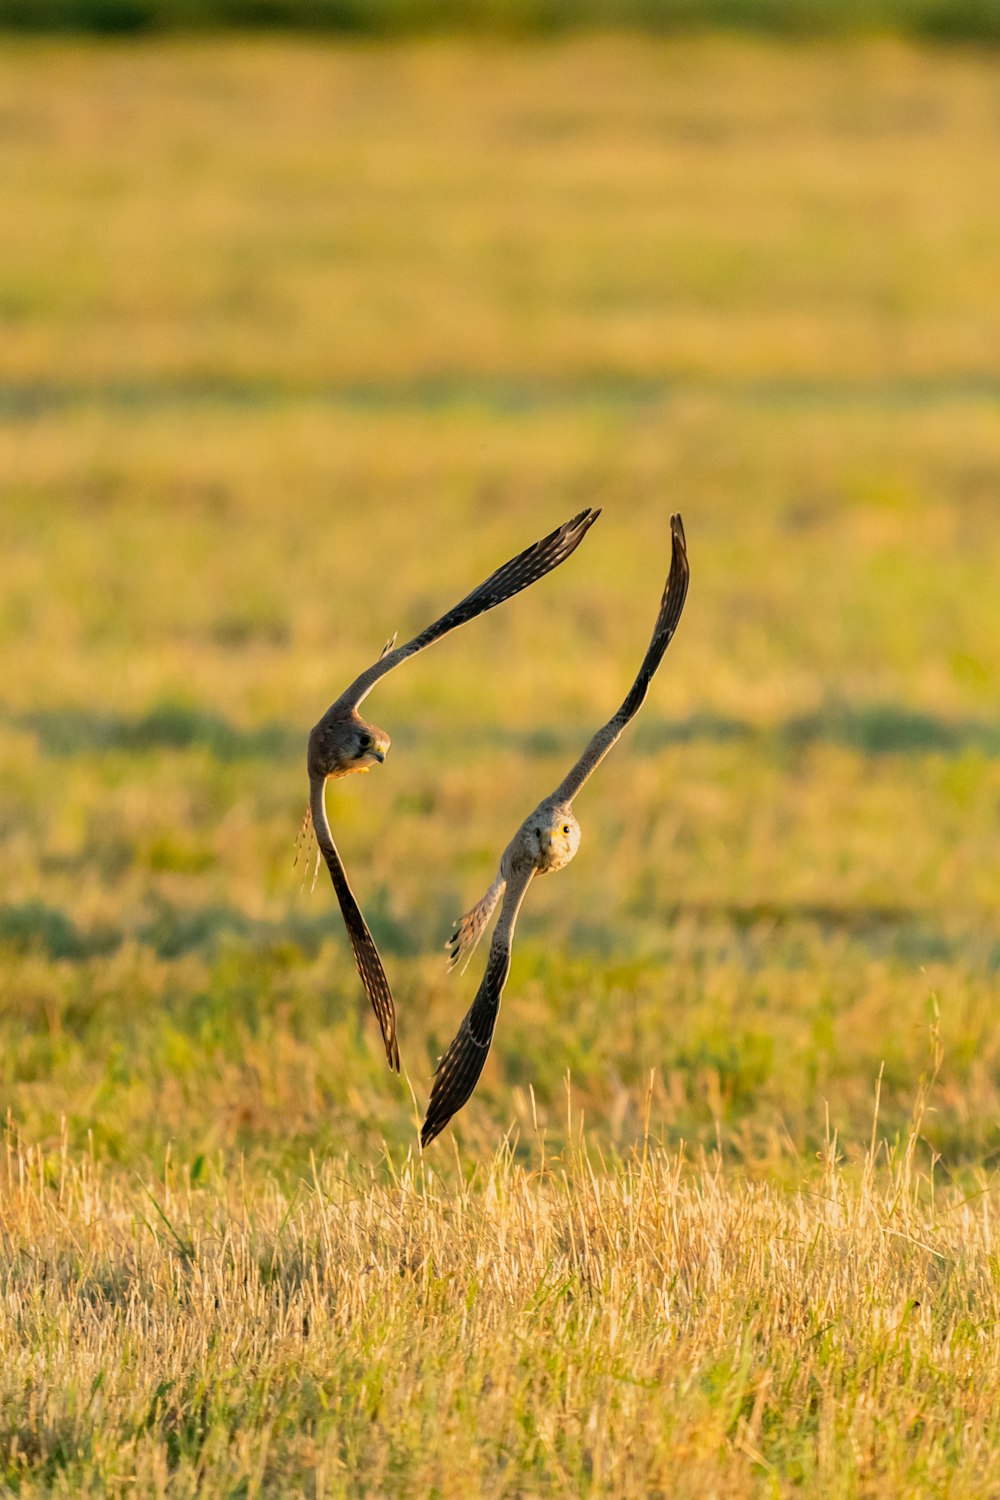 a couple of birds flying through a field